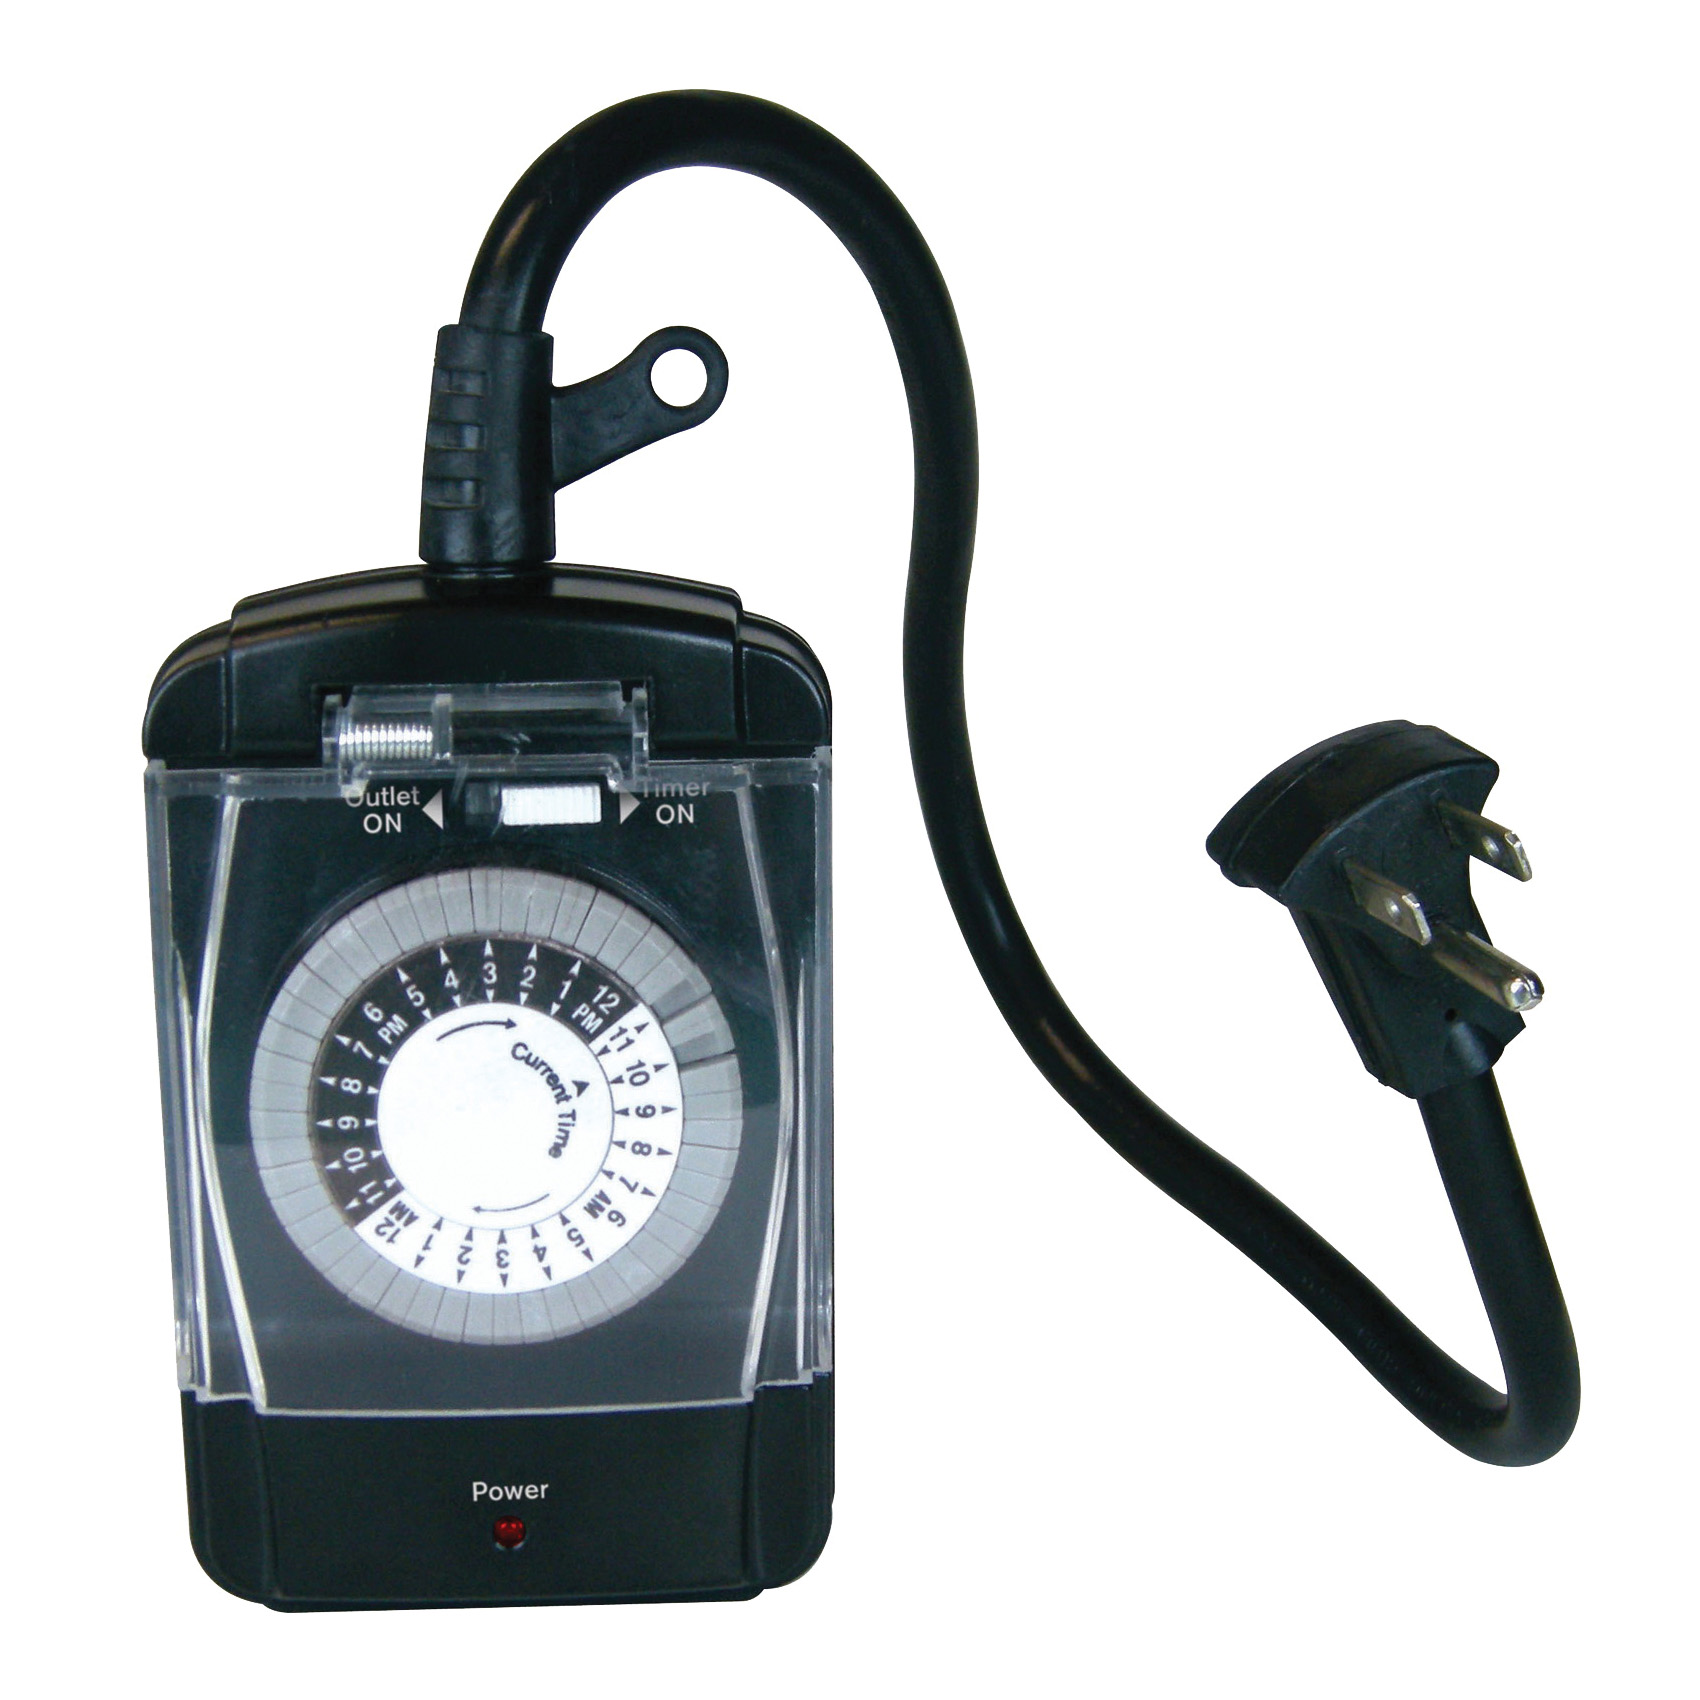 PowerZone TNO24111 Electromechanical Timer, 15 A, 125 V, 1875 W, 2-Outlet, 24 hrs Time Setting, Black - 1